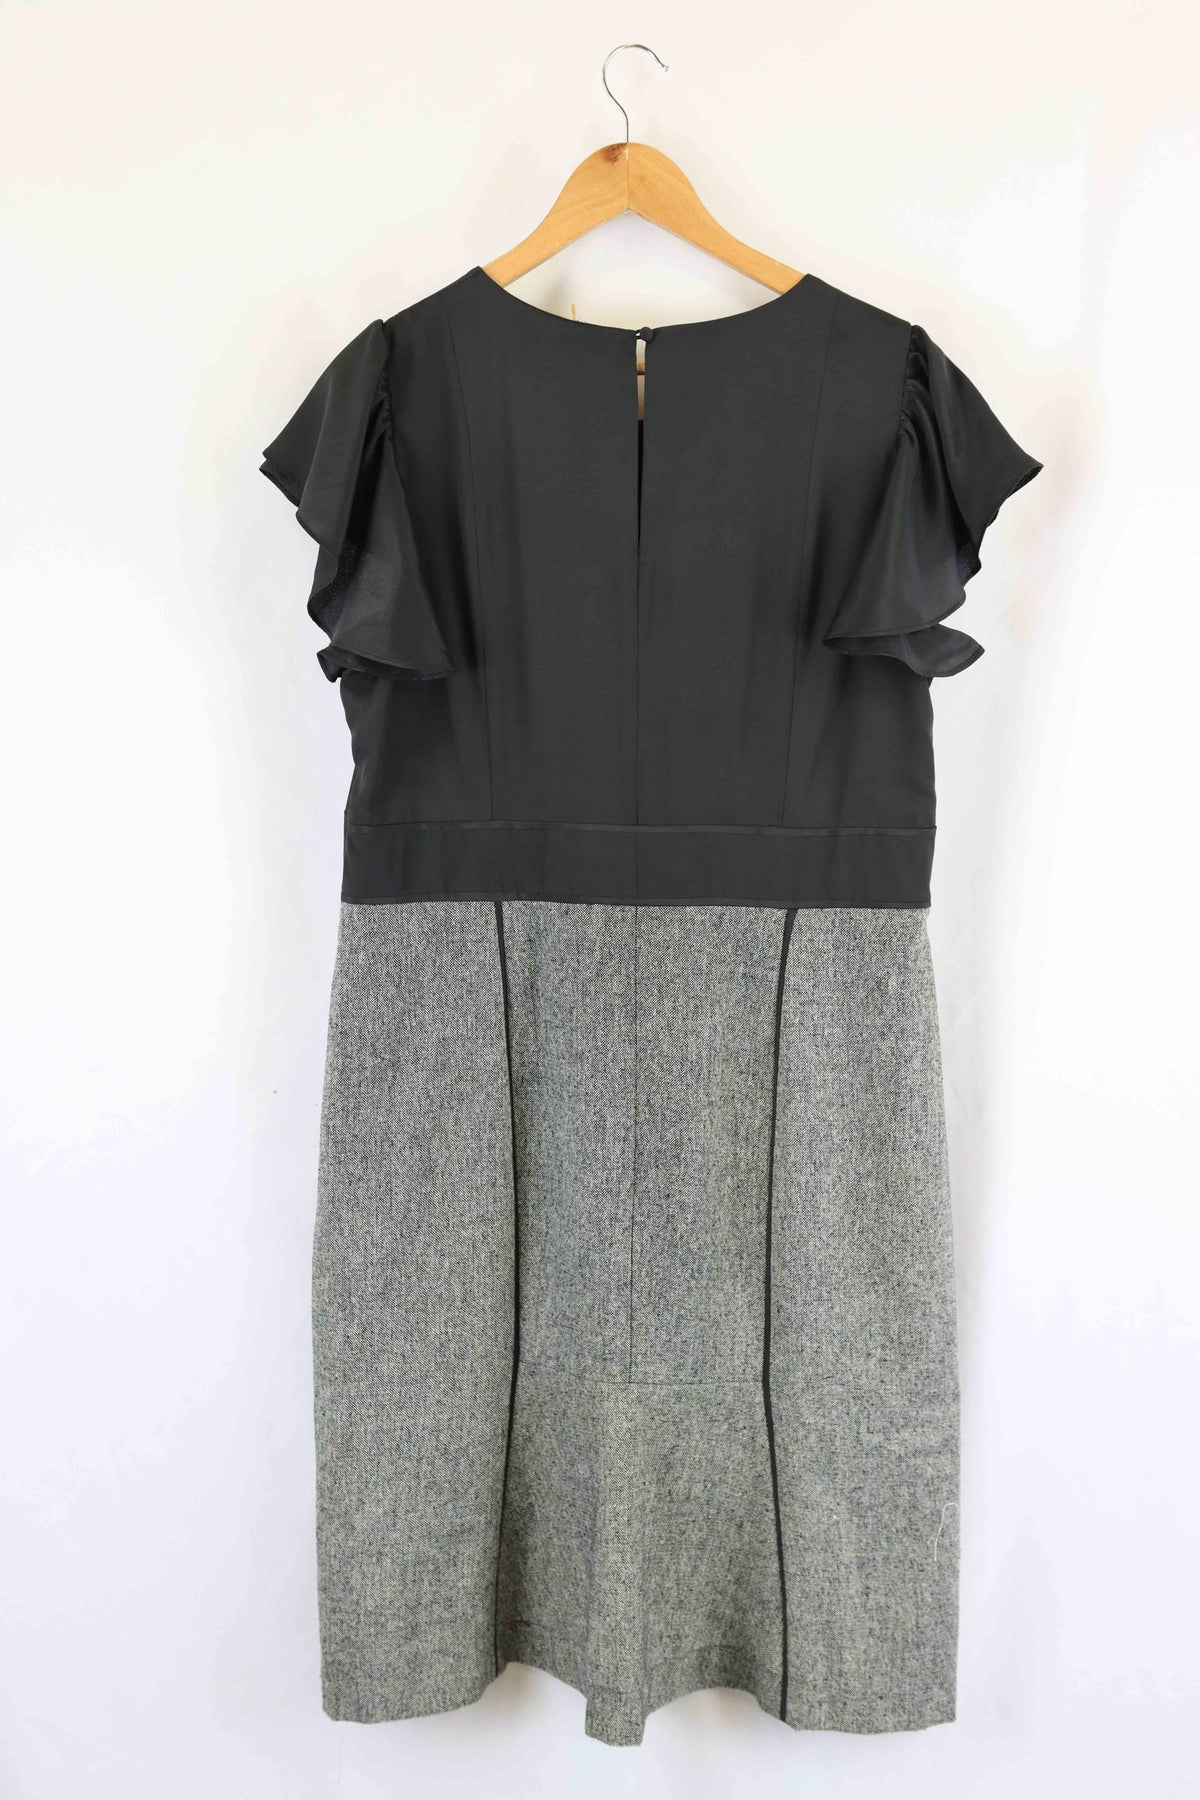 Diana Ferrai Black And Grey Dress 16